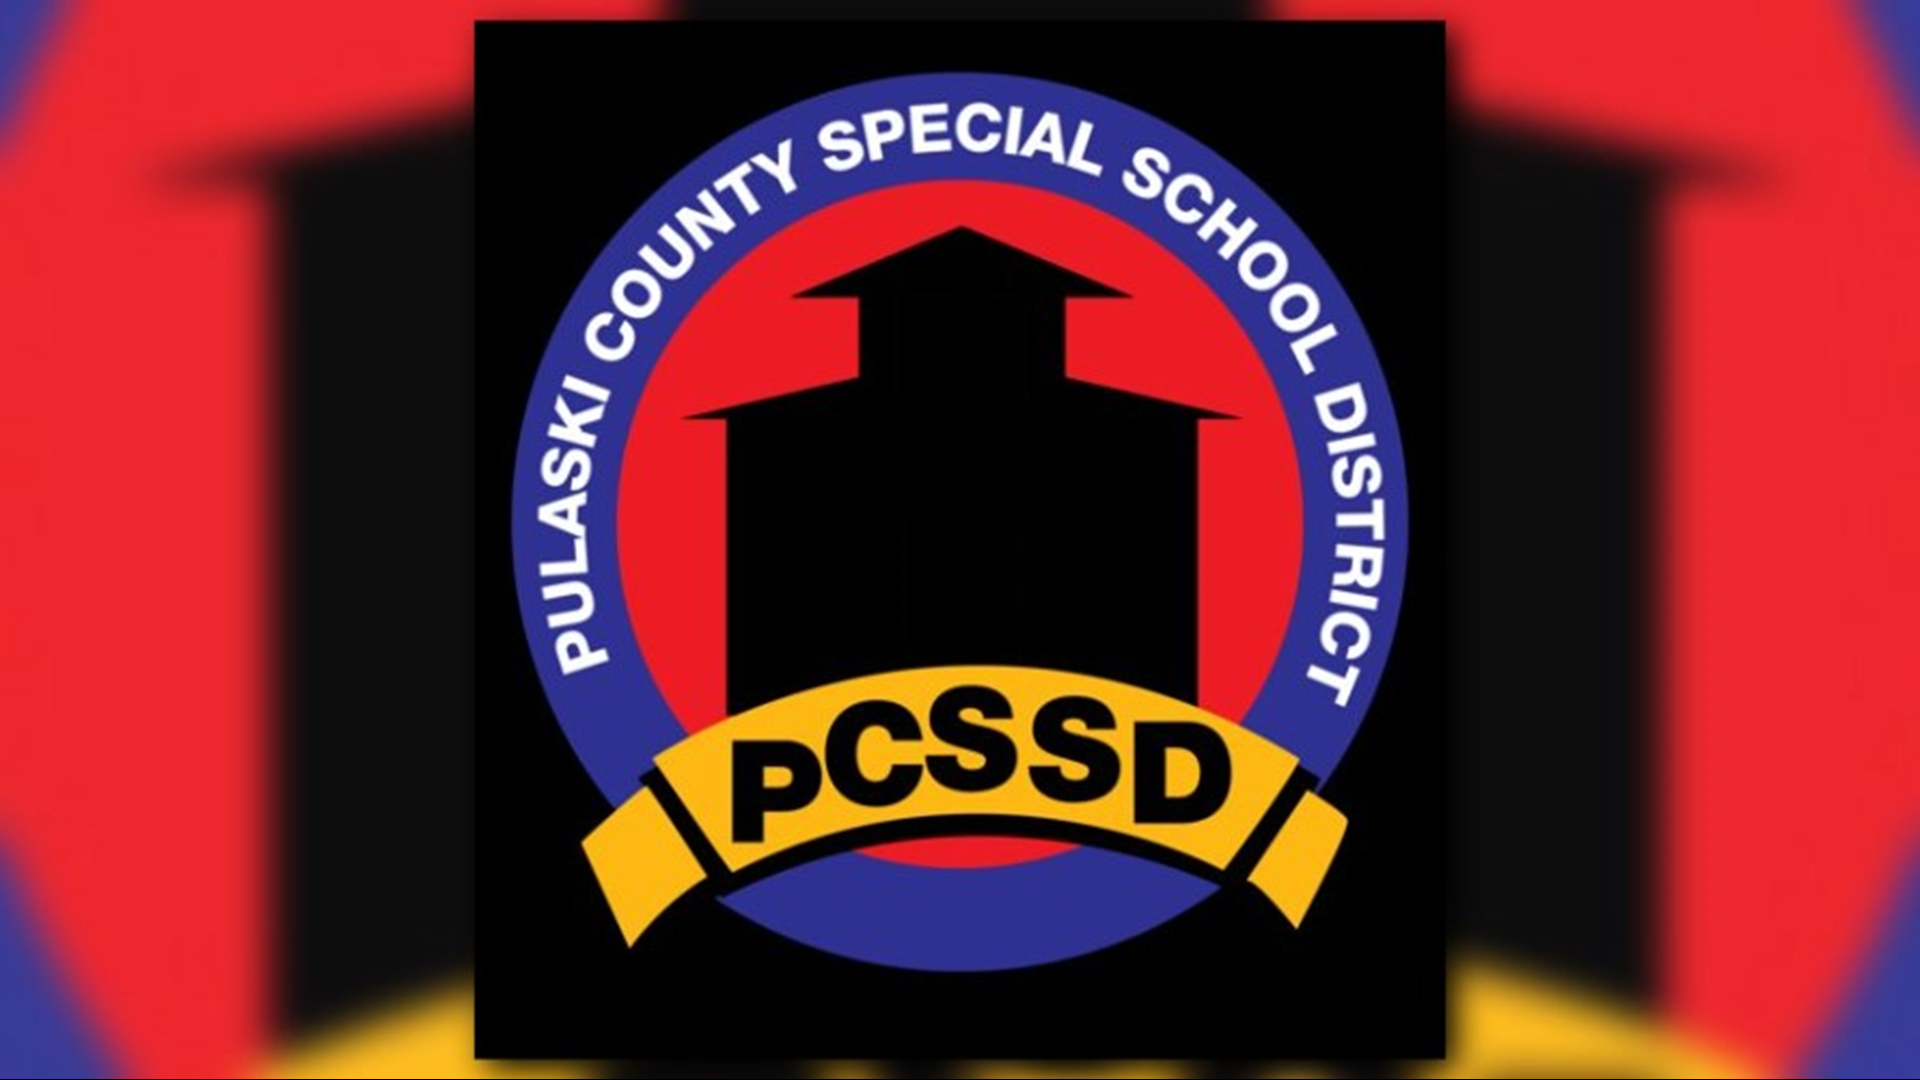 Pulaski county special school district job openings